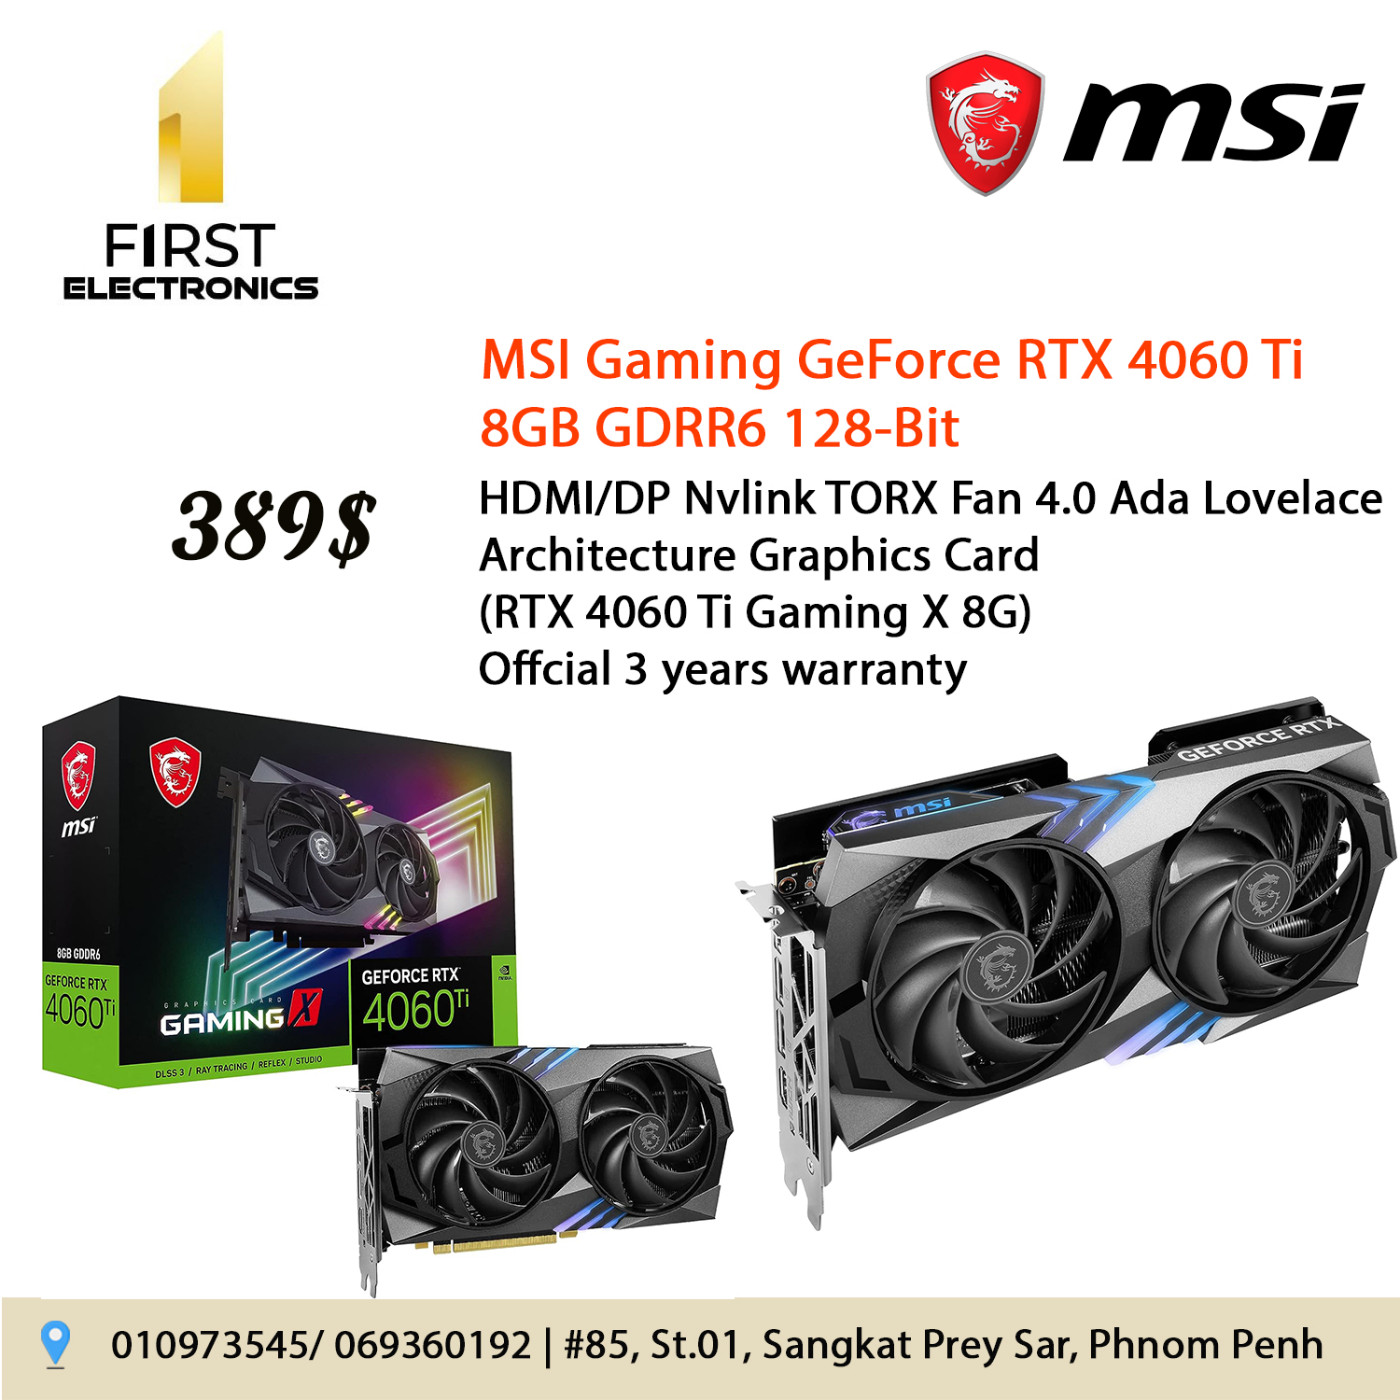  MSI Gaming GeForce RTX 4060 8GB GDRR6 128-Bit HDMI/DP